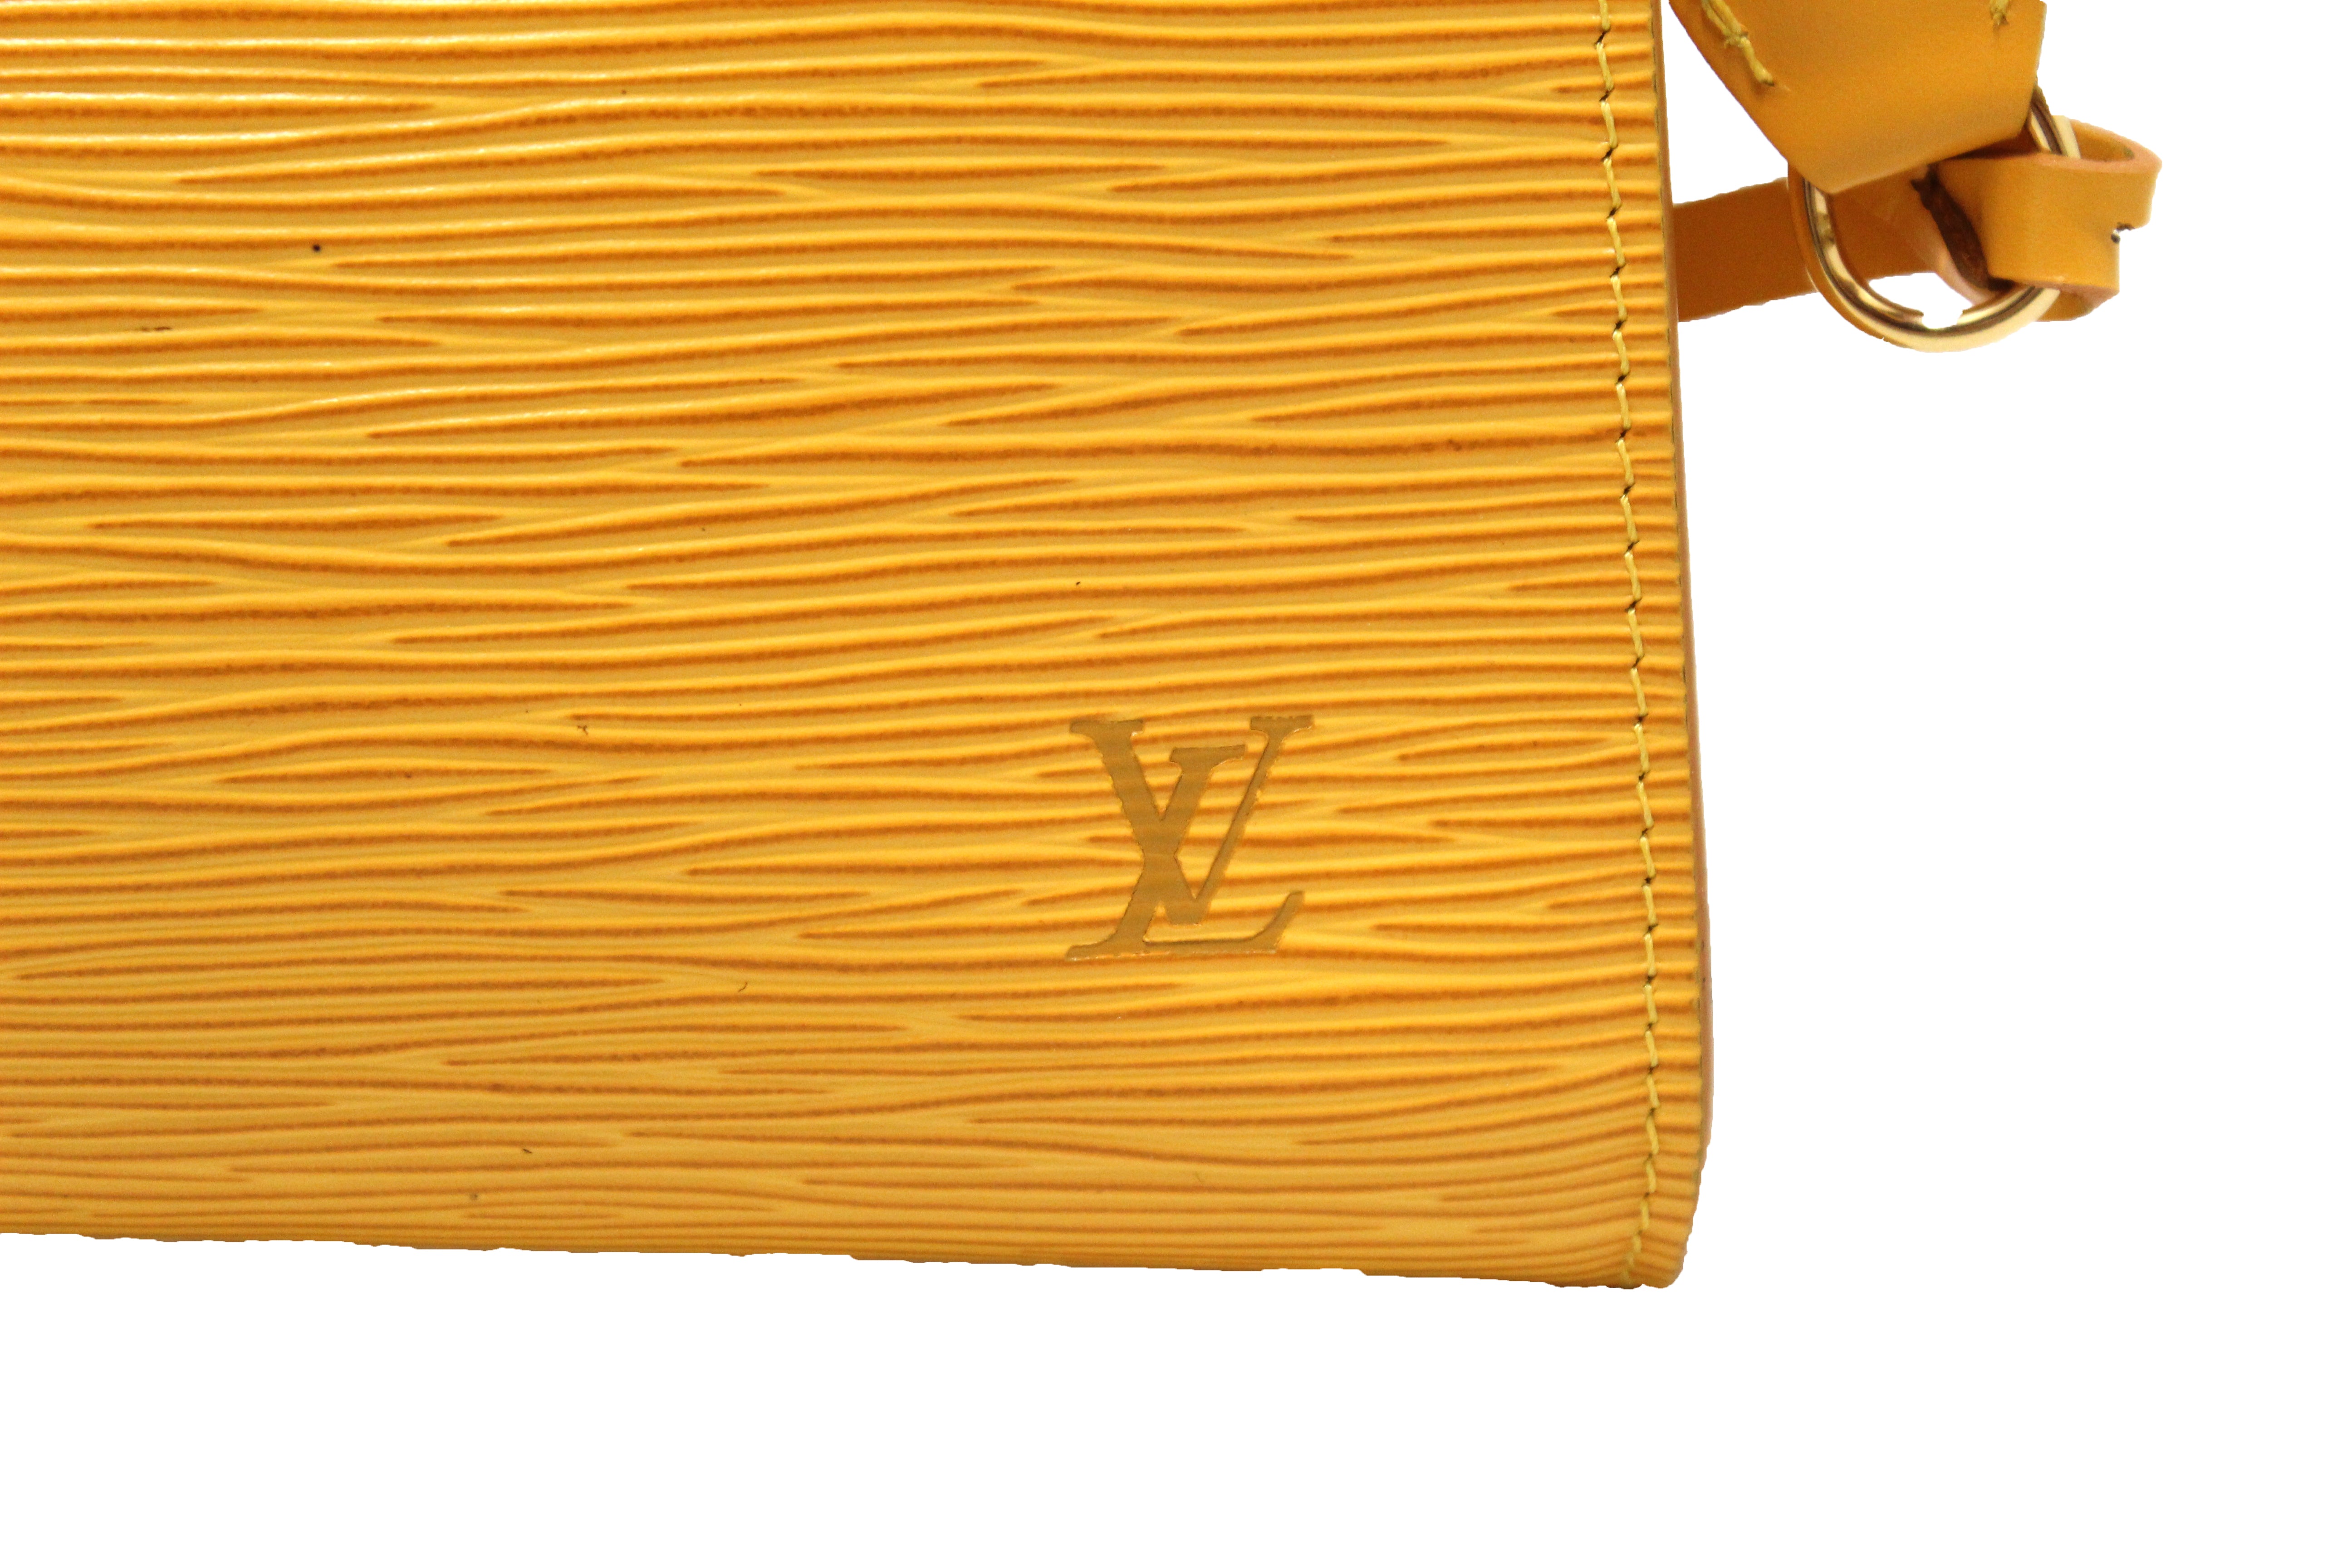 Louis Vuitton Pochette Clutch Epi